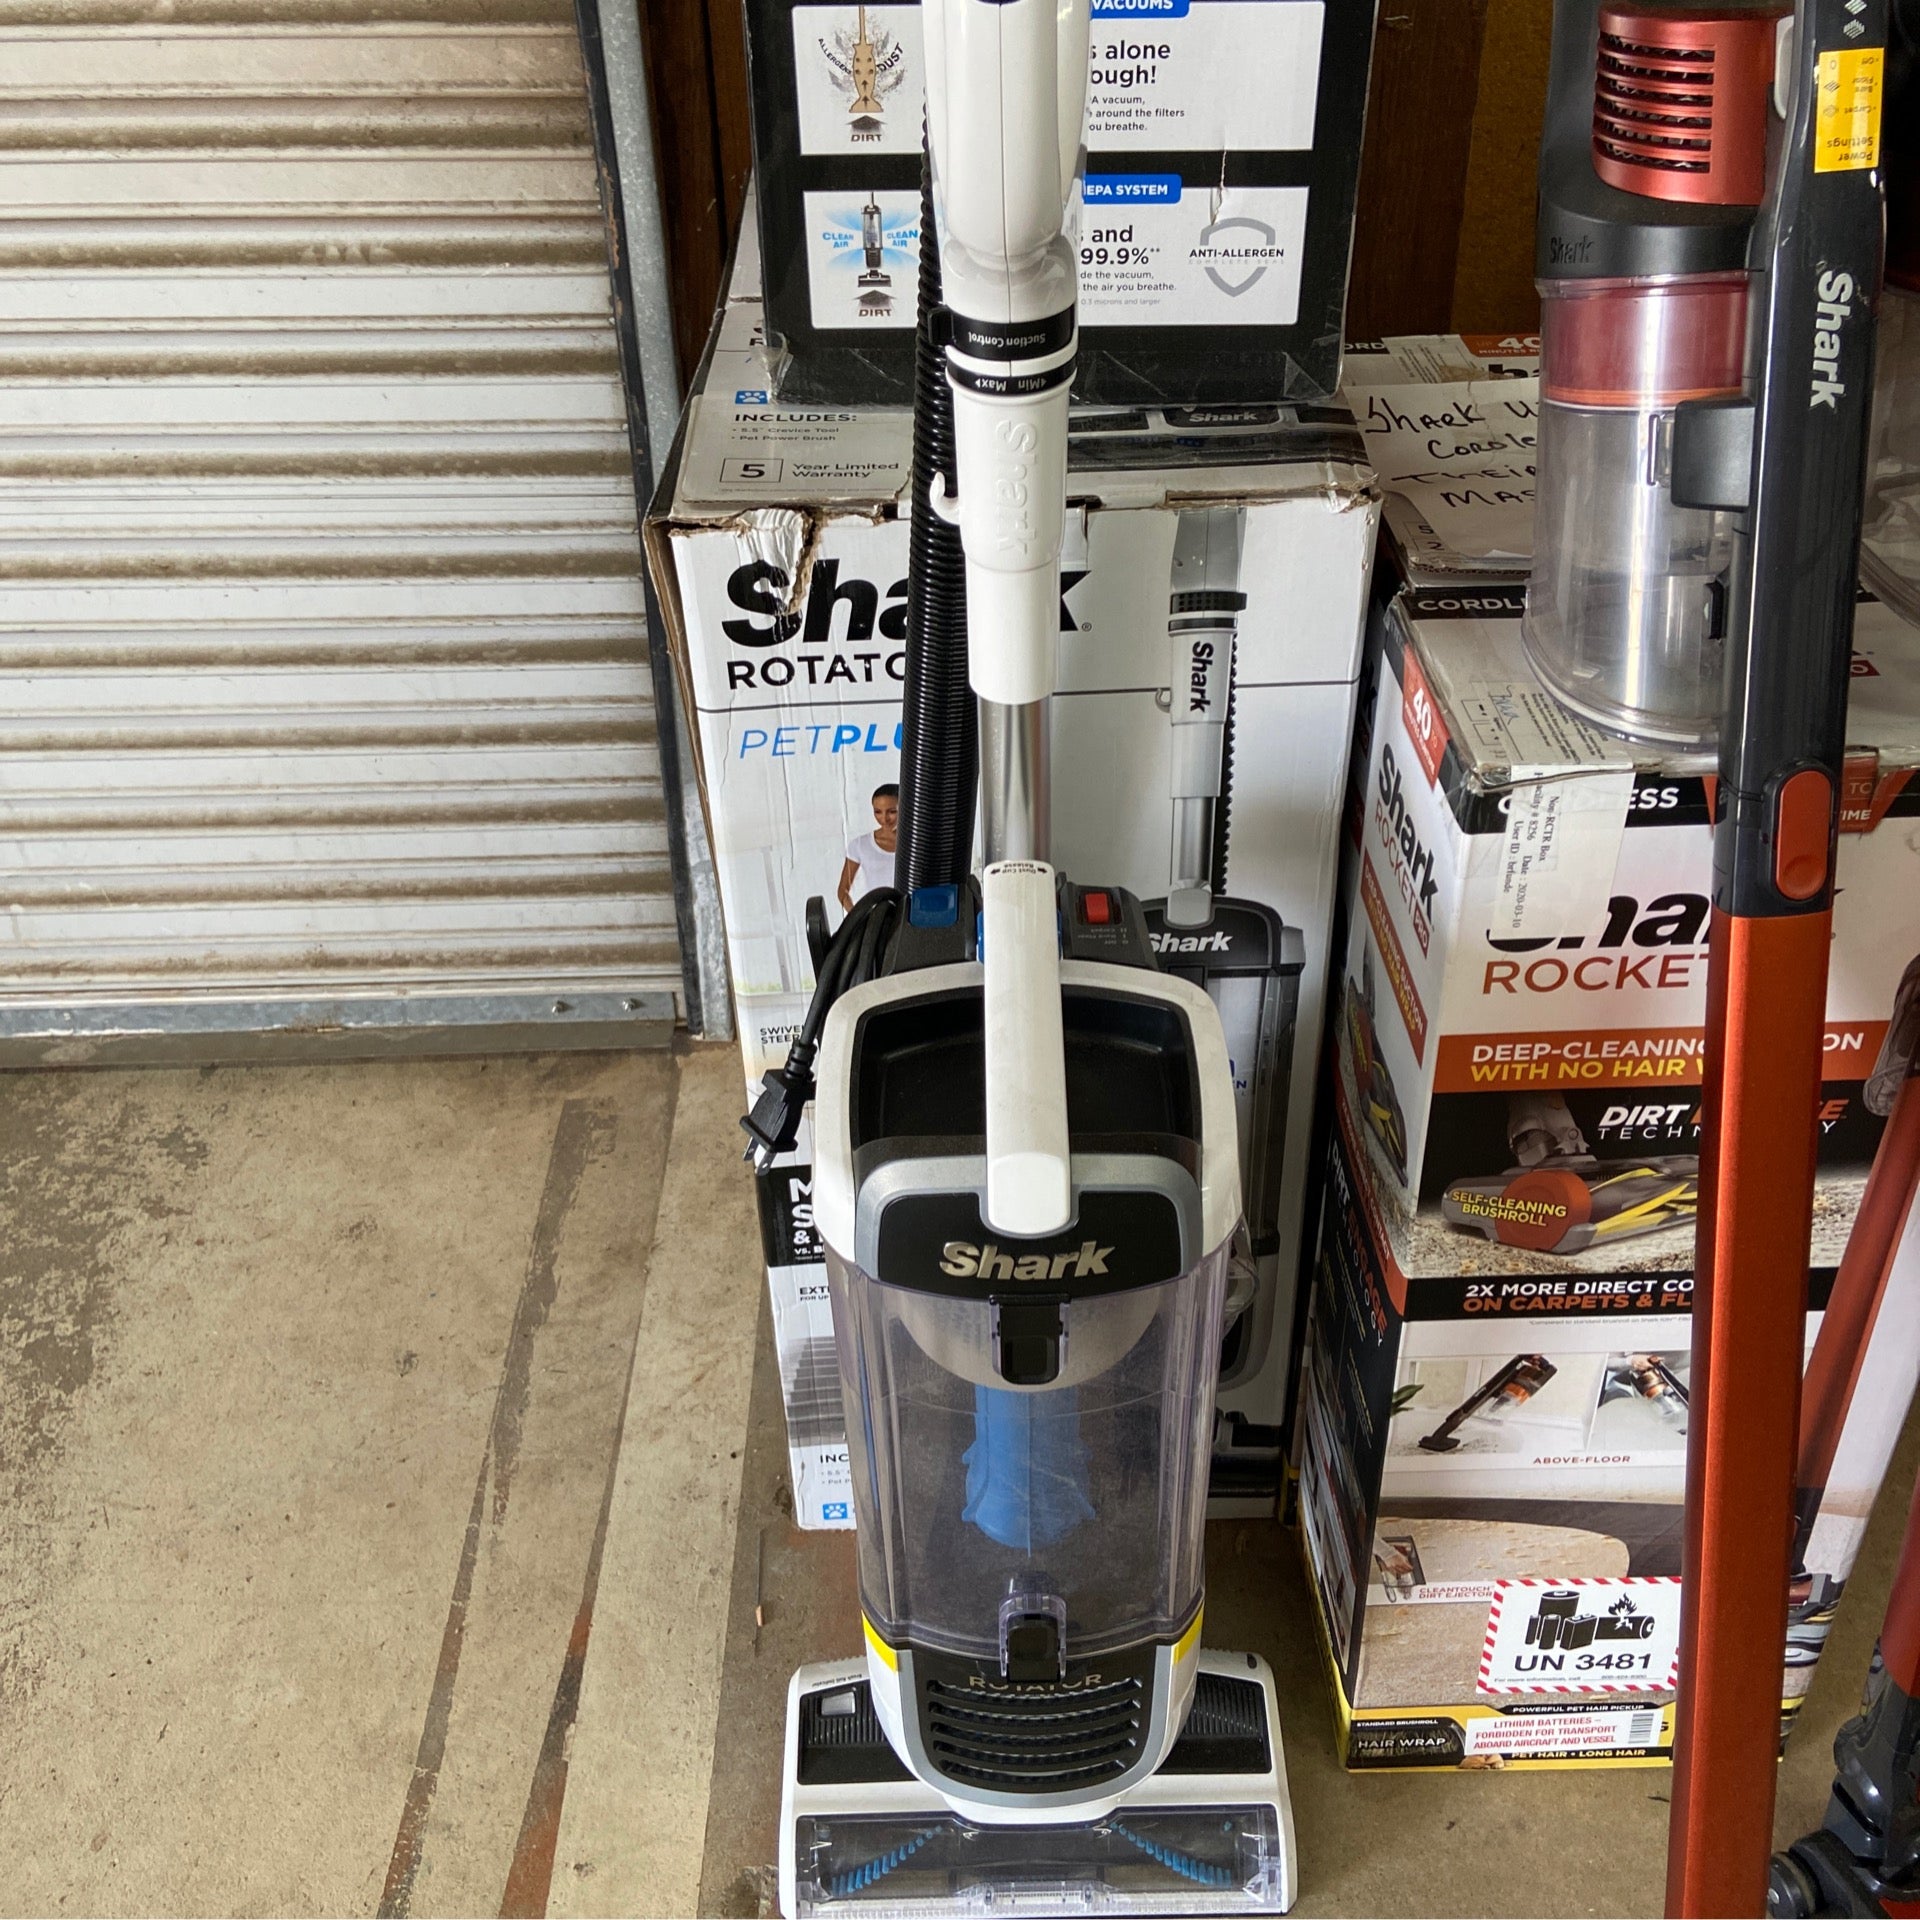 Shark Navigator Self-Cleaning Brushroll Pet Upright Vacuum 